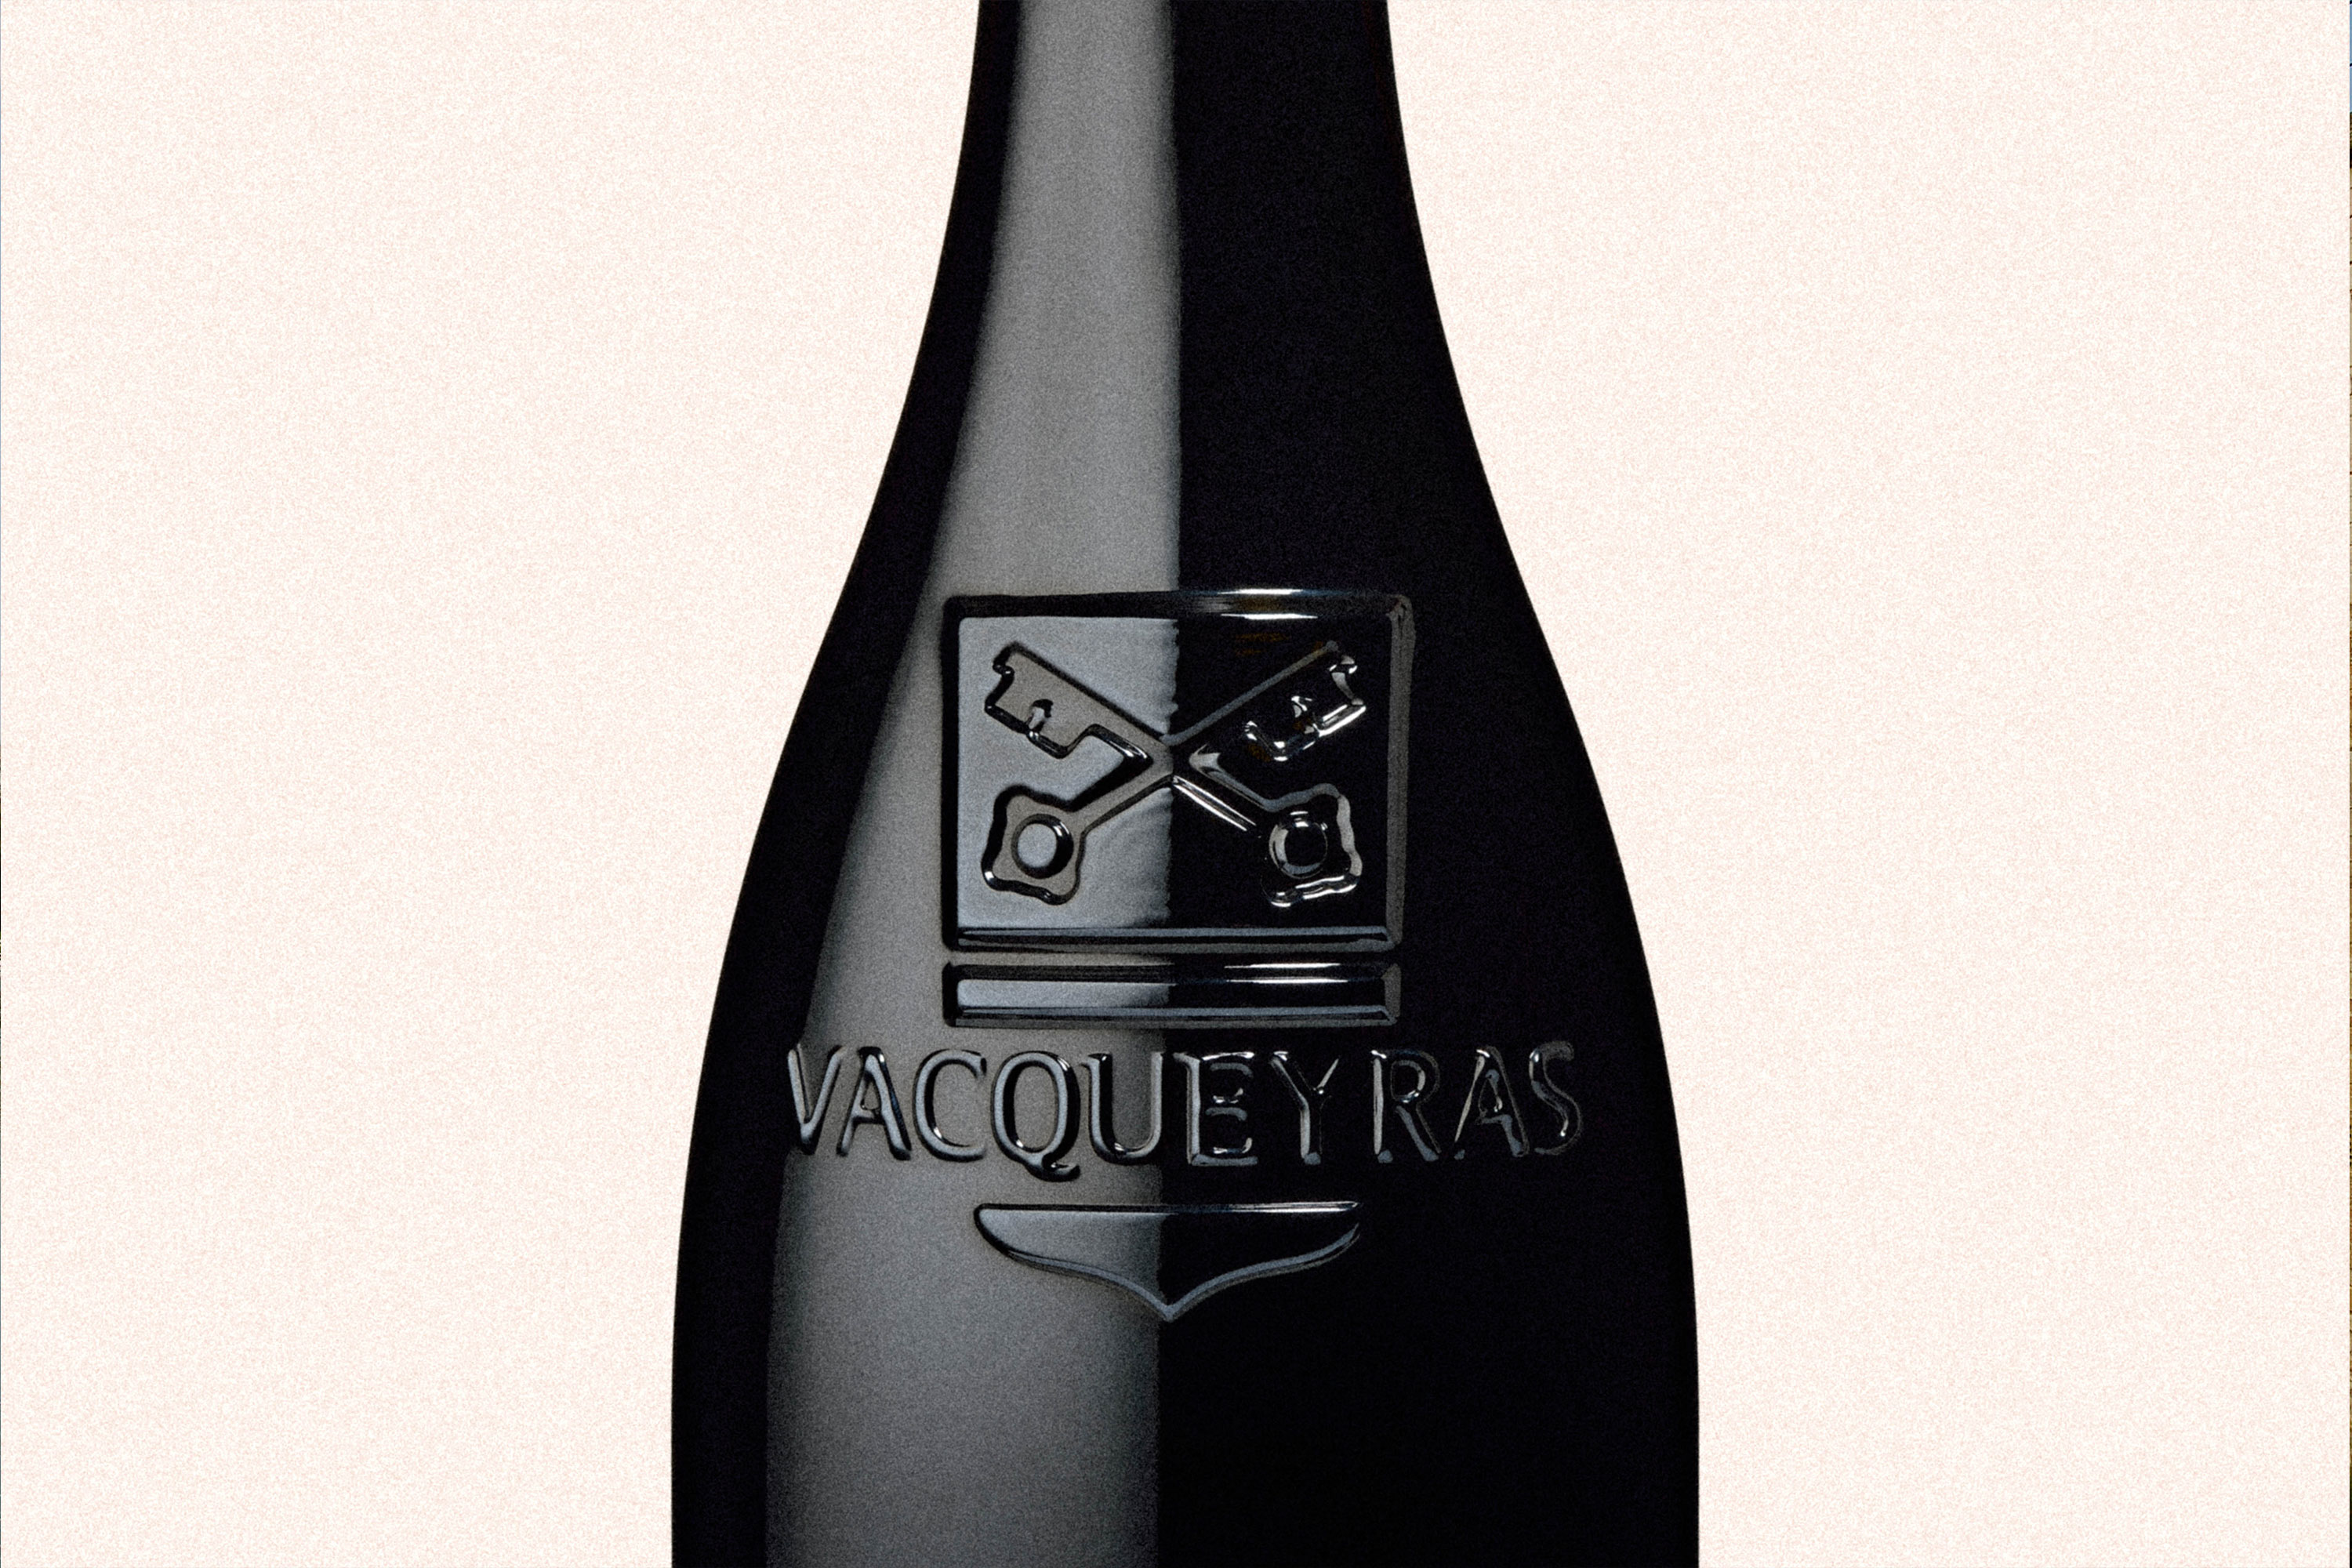 AOC - The Vacqueyras appellation